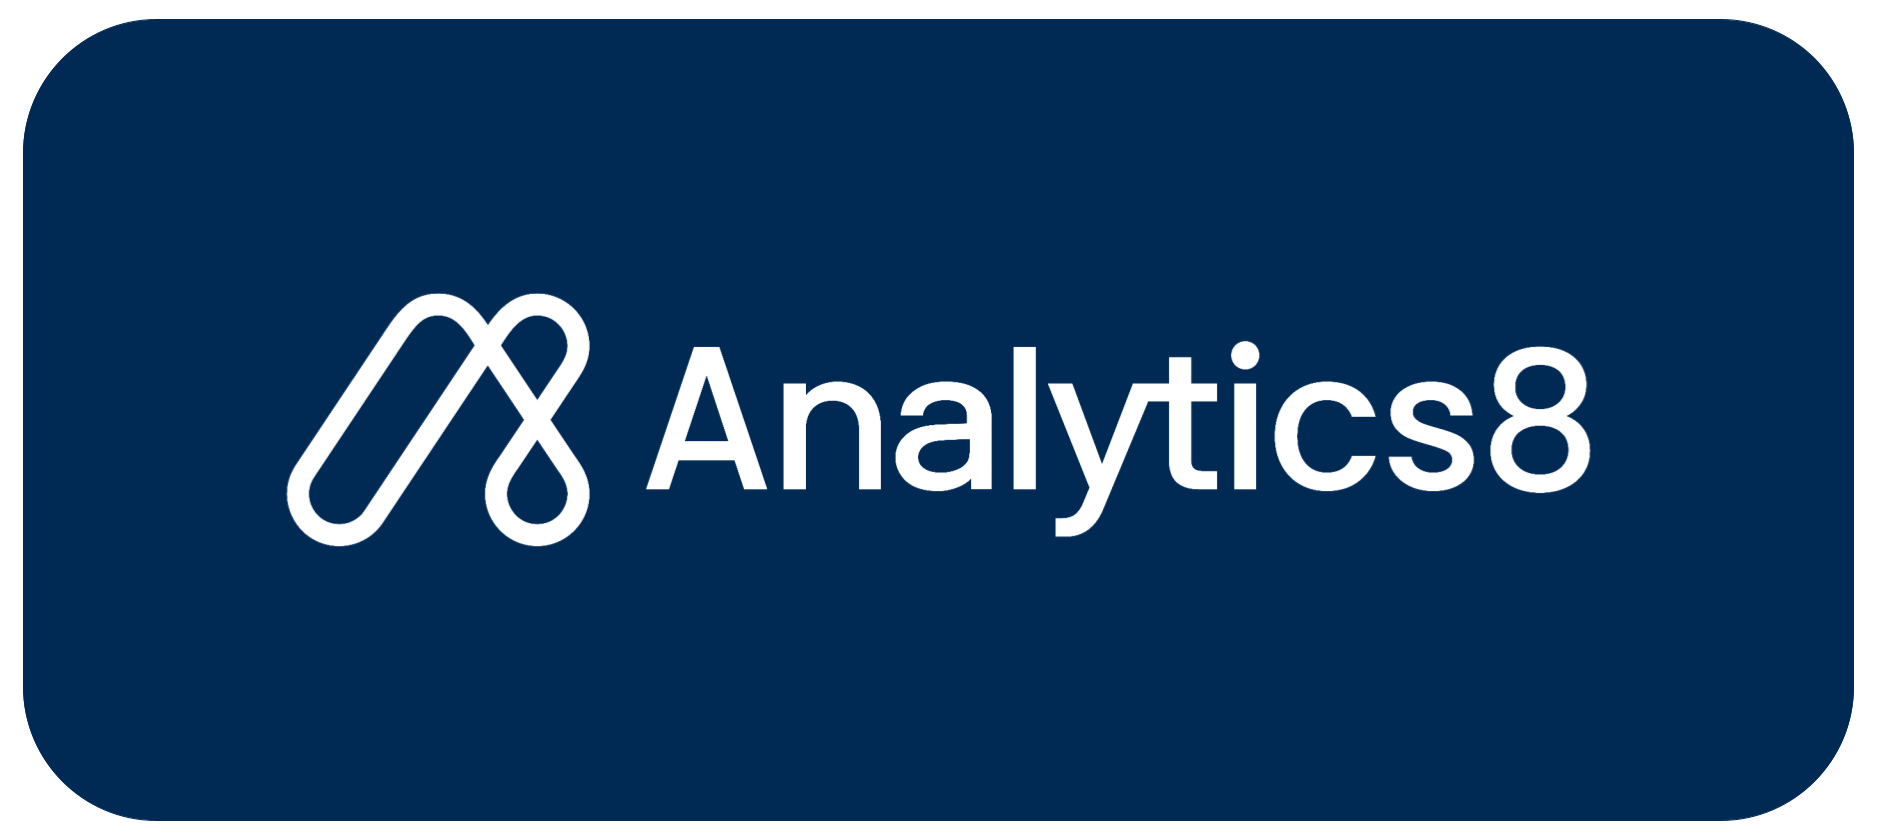 Analytics8 partner logo - visual for website